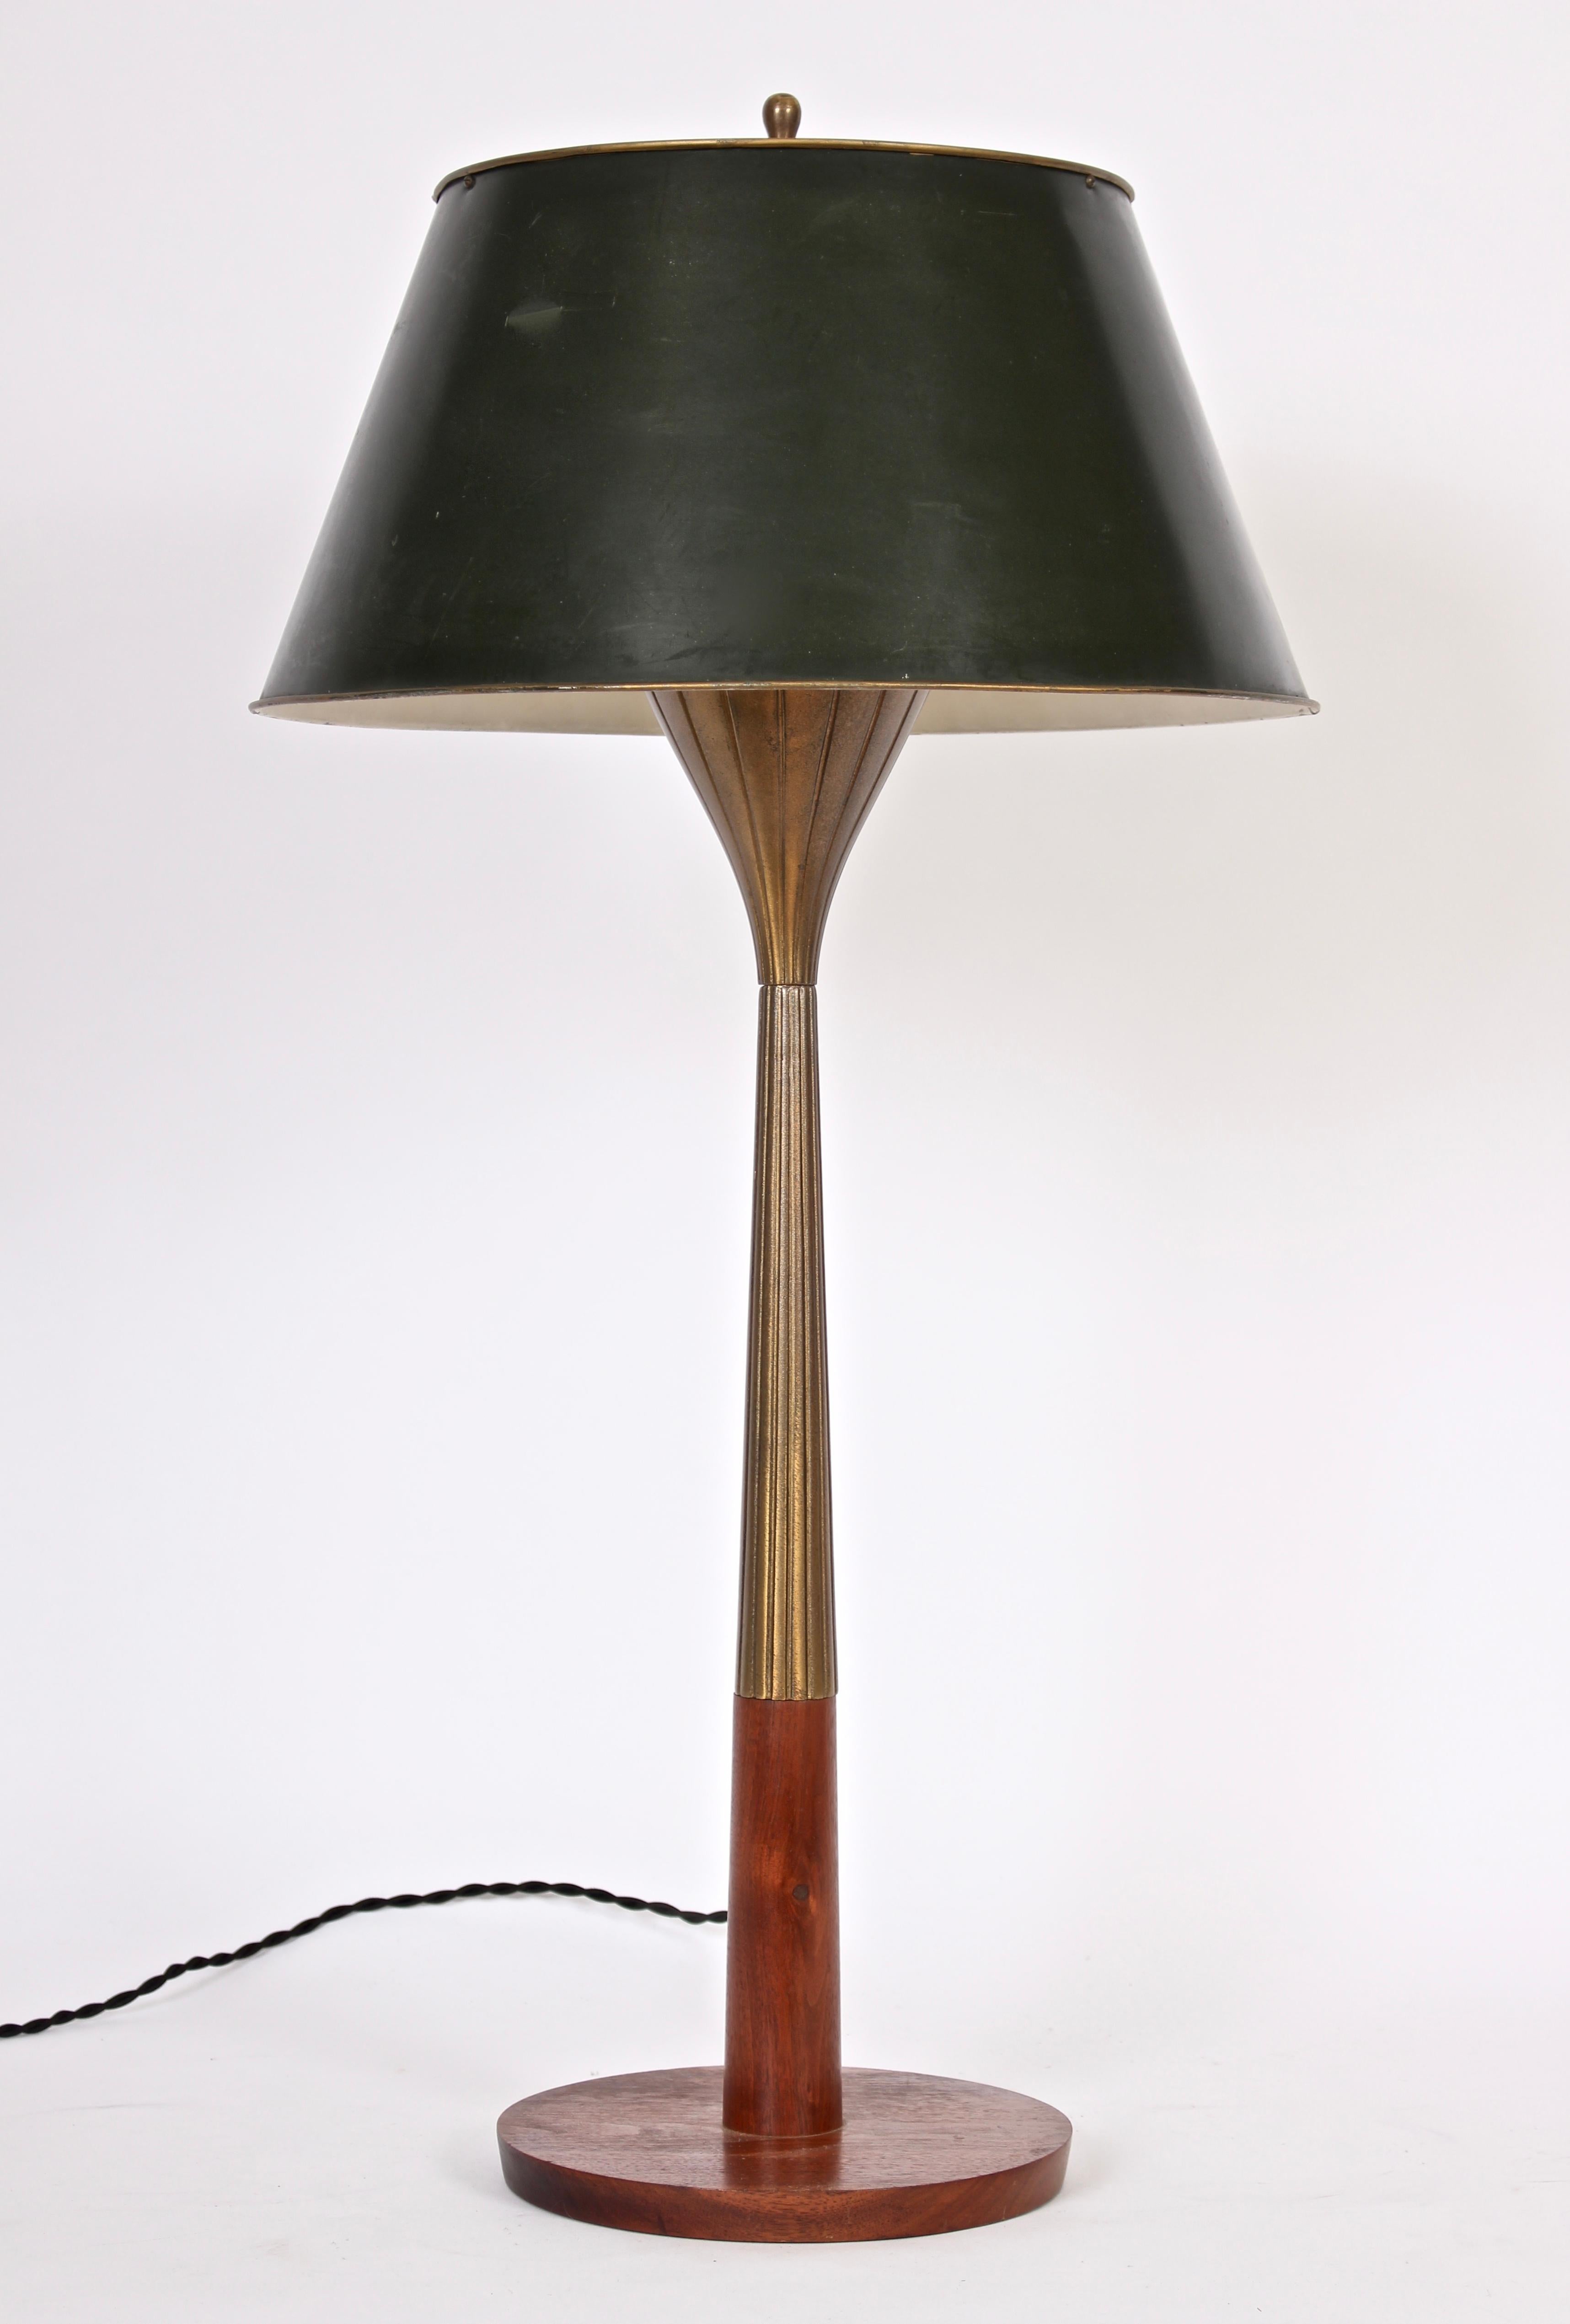 Tall Gerald Thurston for Lightolier Radiating Brass & Walnut Table Lamp For Sale 4